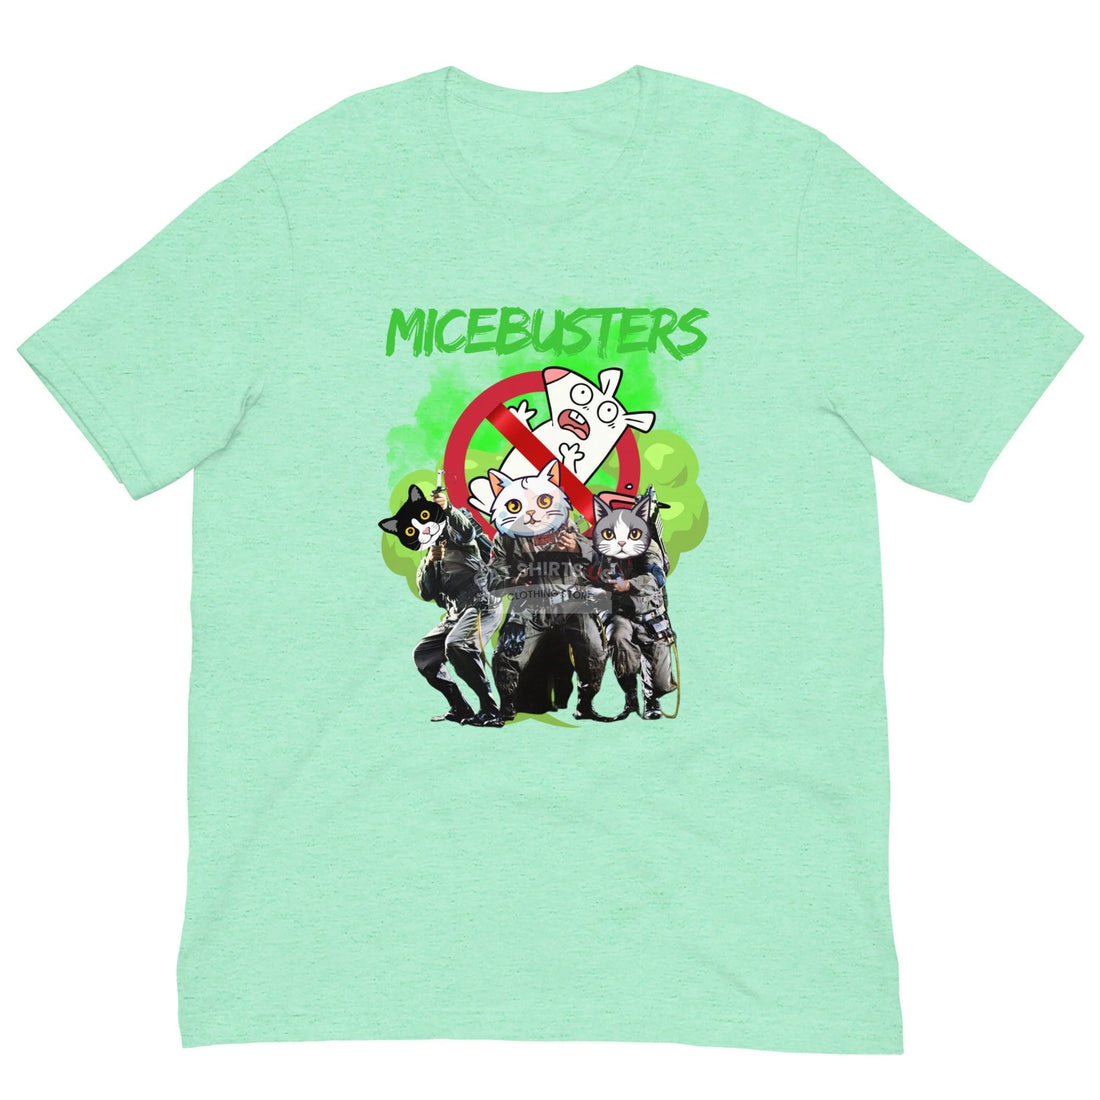 Mice Busters Cat Shirt - Cat Shirts USA